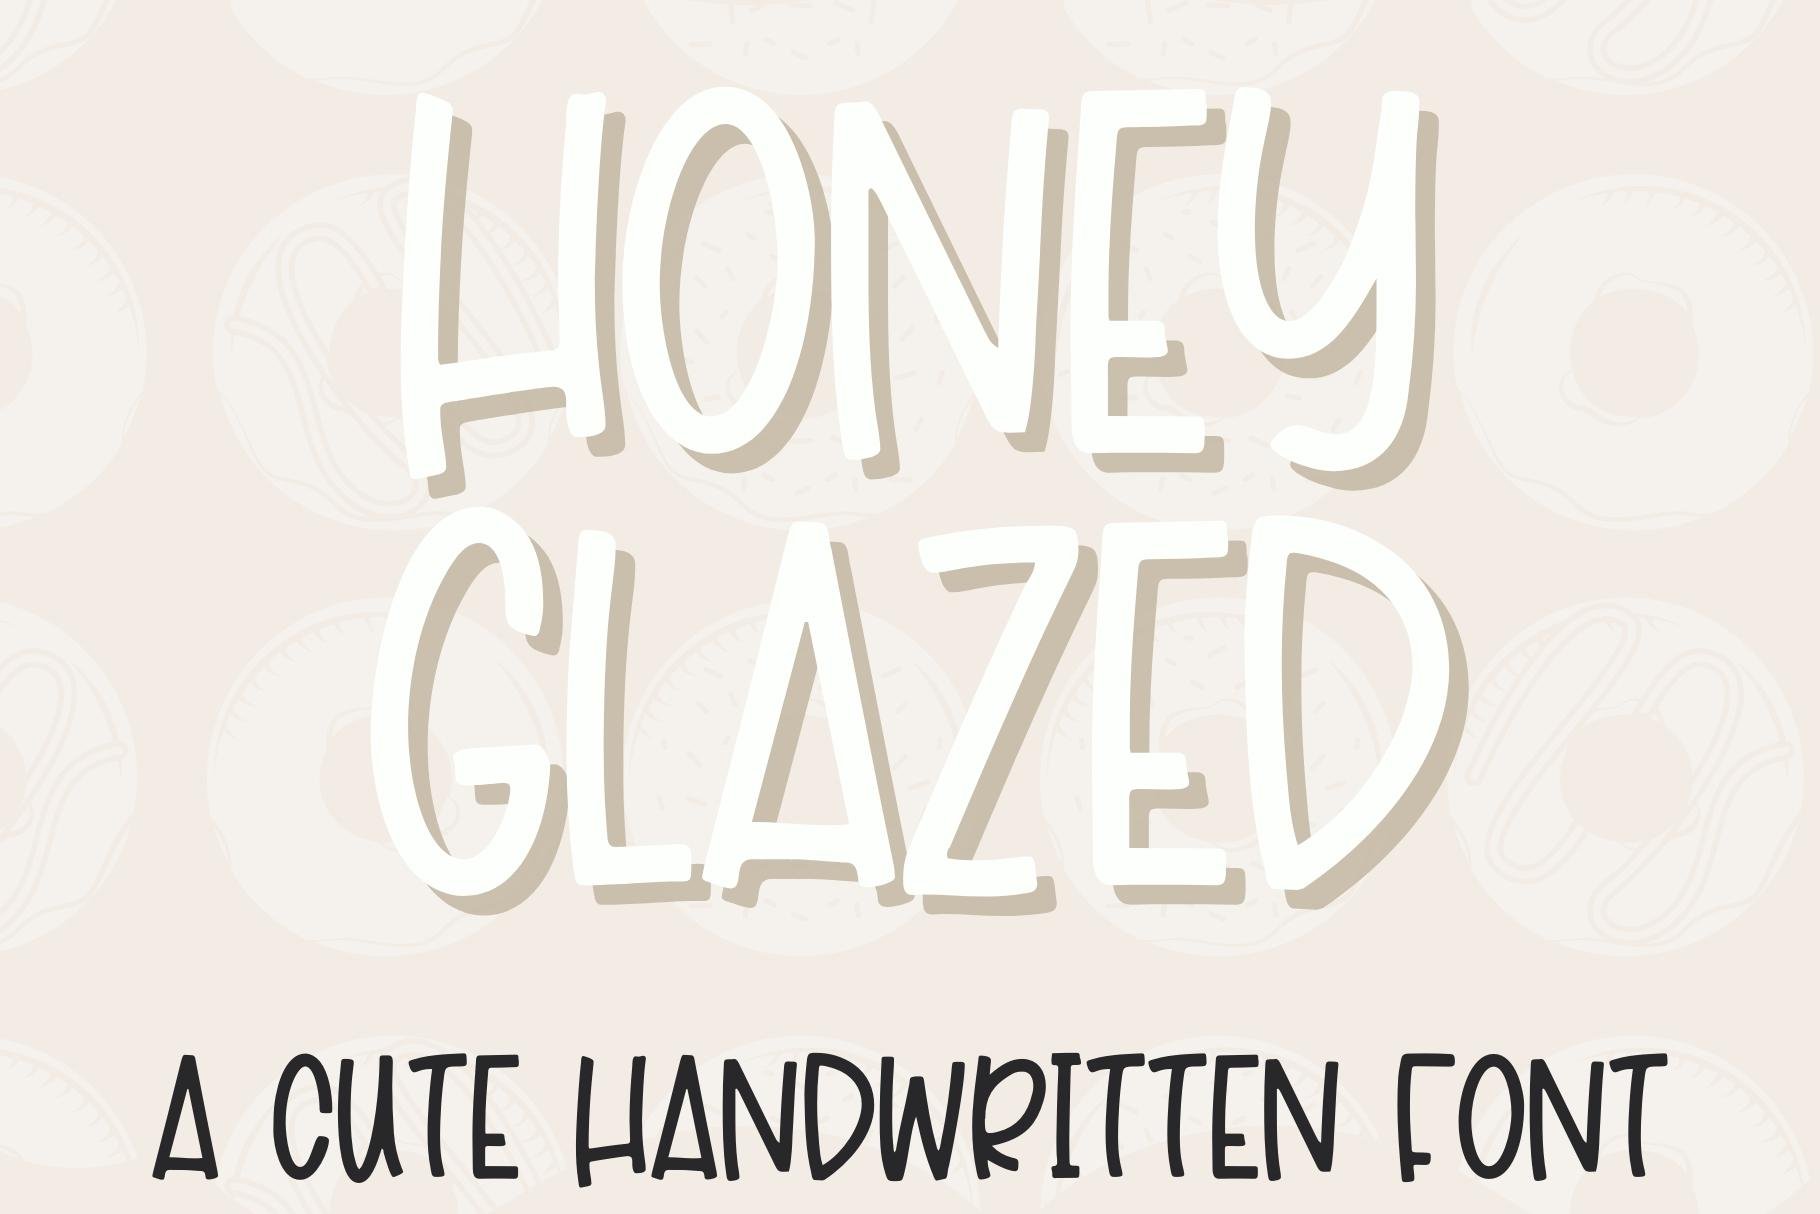 Honey Glazed, Fun Handwriting Font cover image.